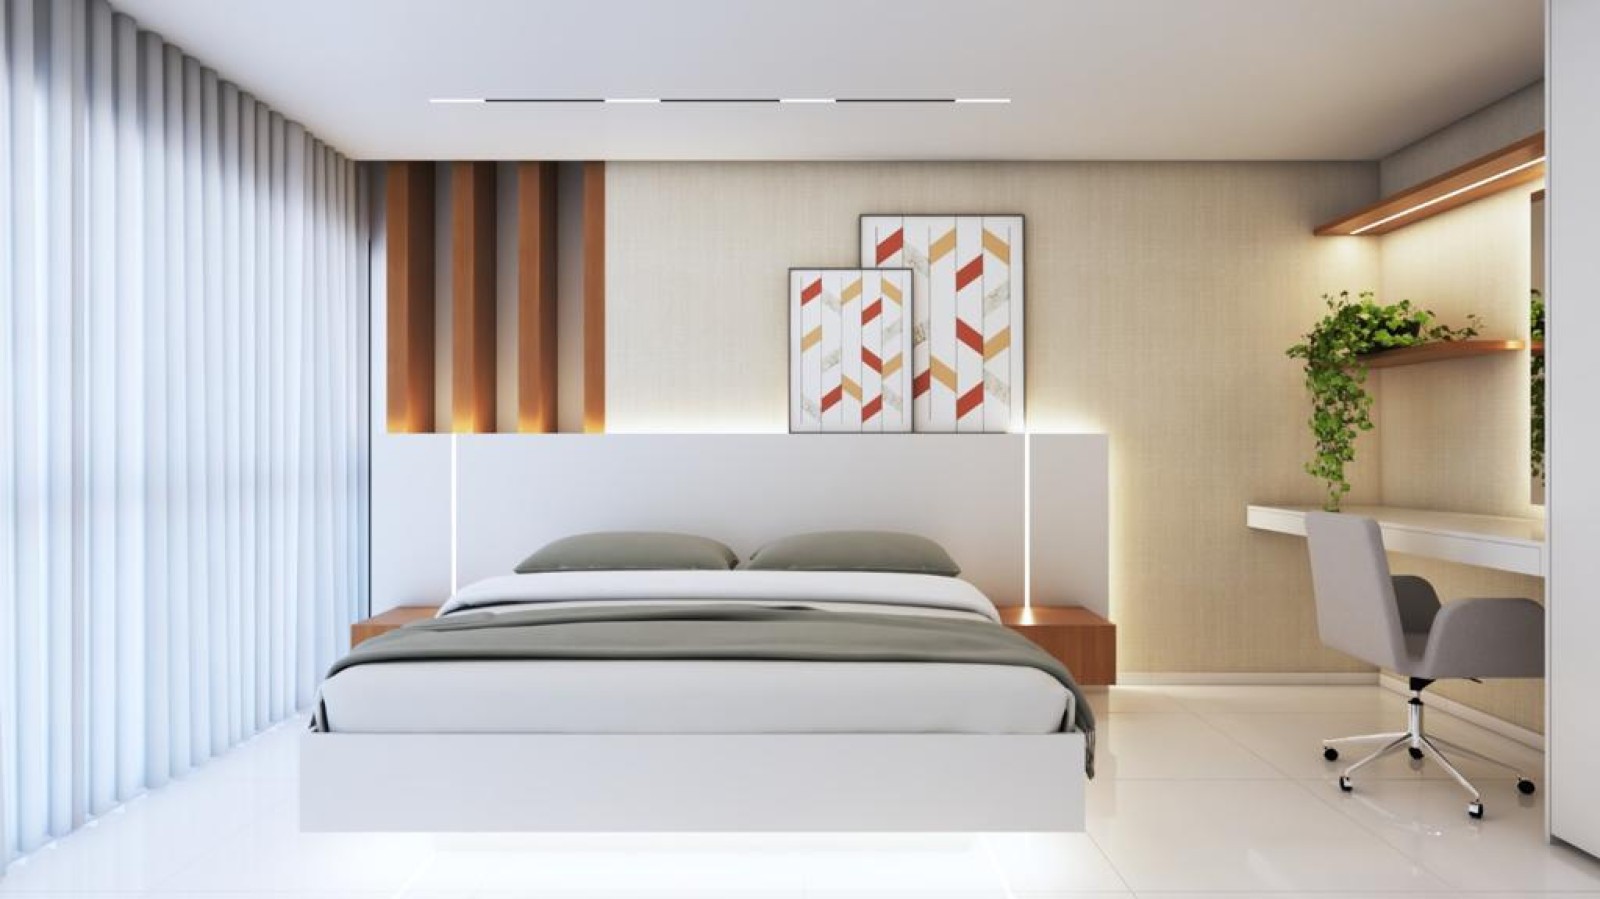 3 Bedroom Luxury House, for sale, in Portimão, Algarve_224555